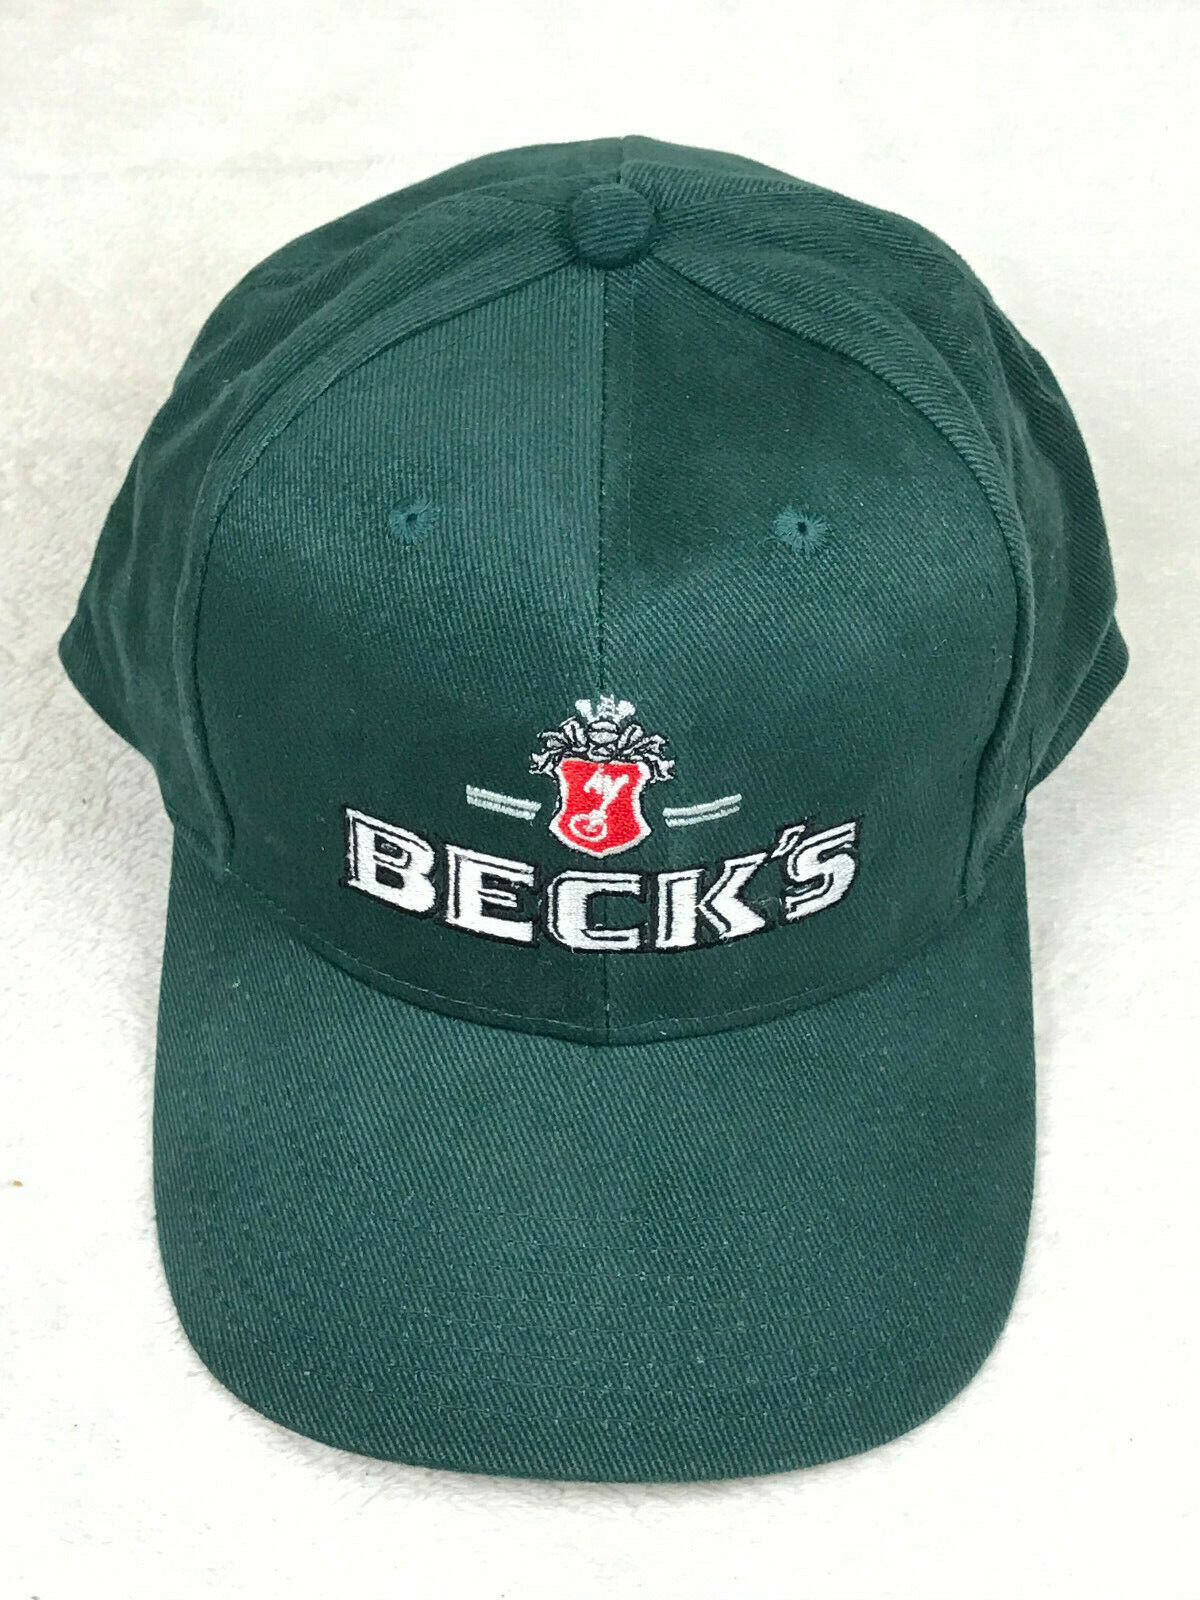 Becks Beer Embroidered Baseball Golf Hat Green Adjustable NEW